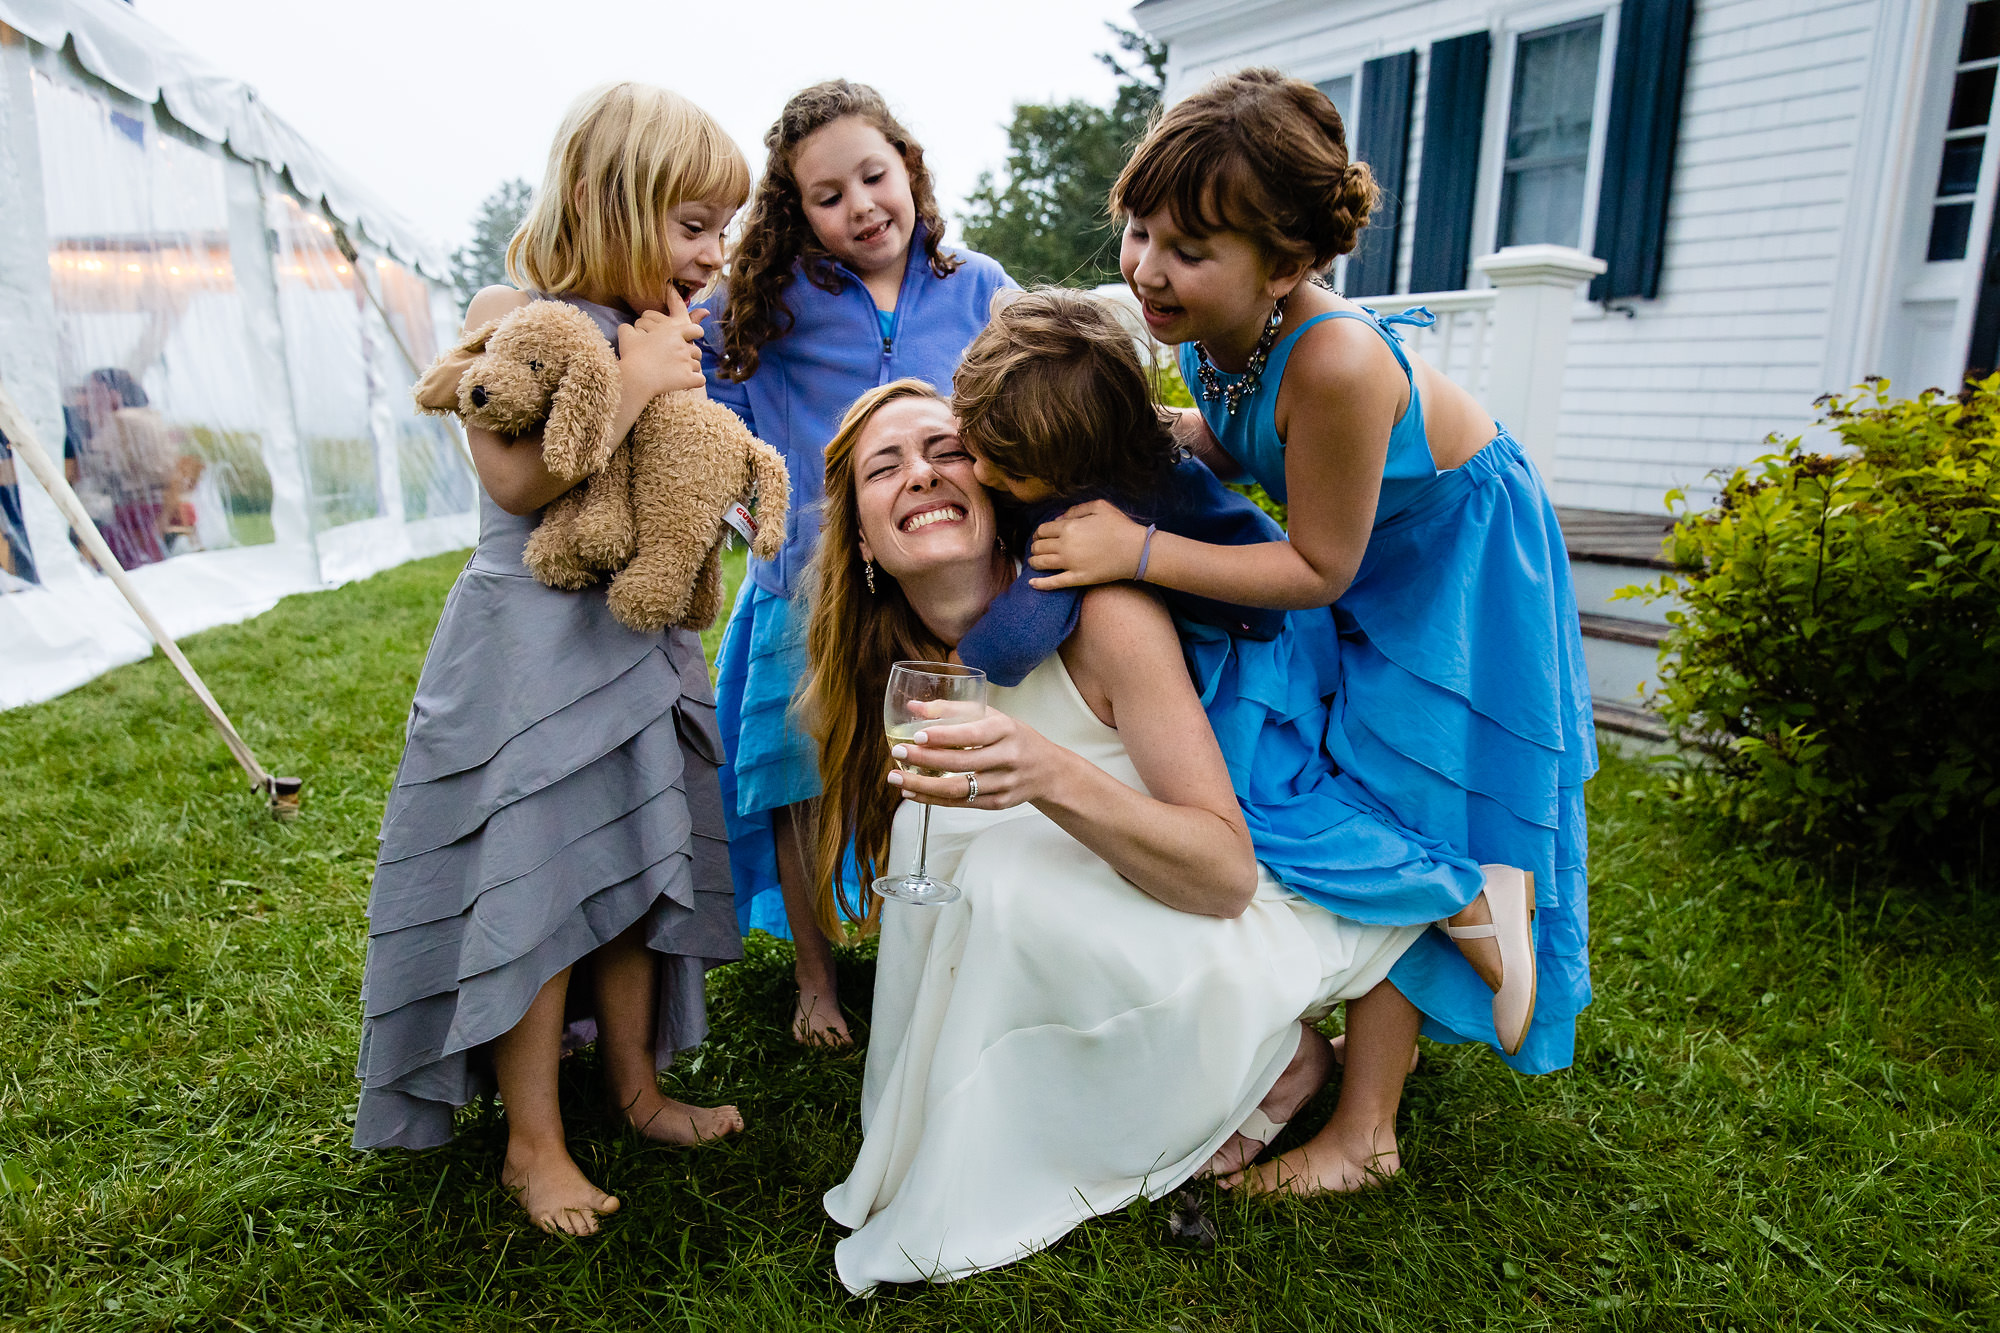 A tented wedding reception in Bernard Maine